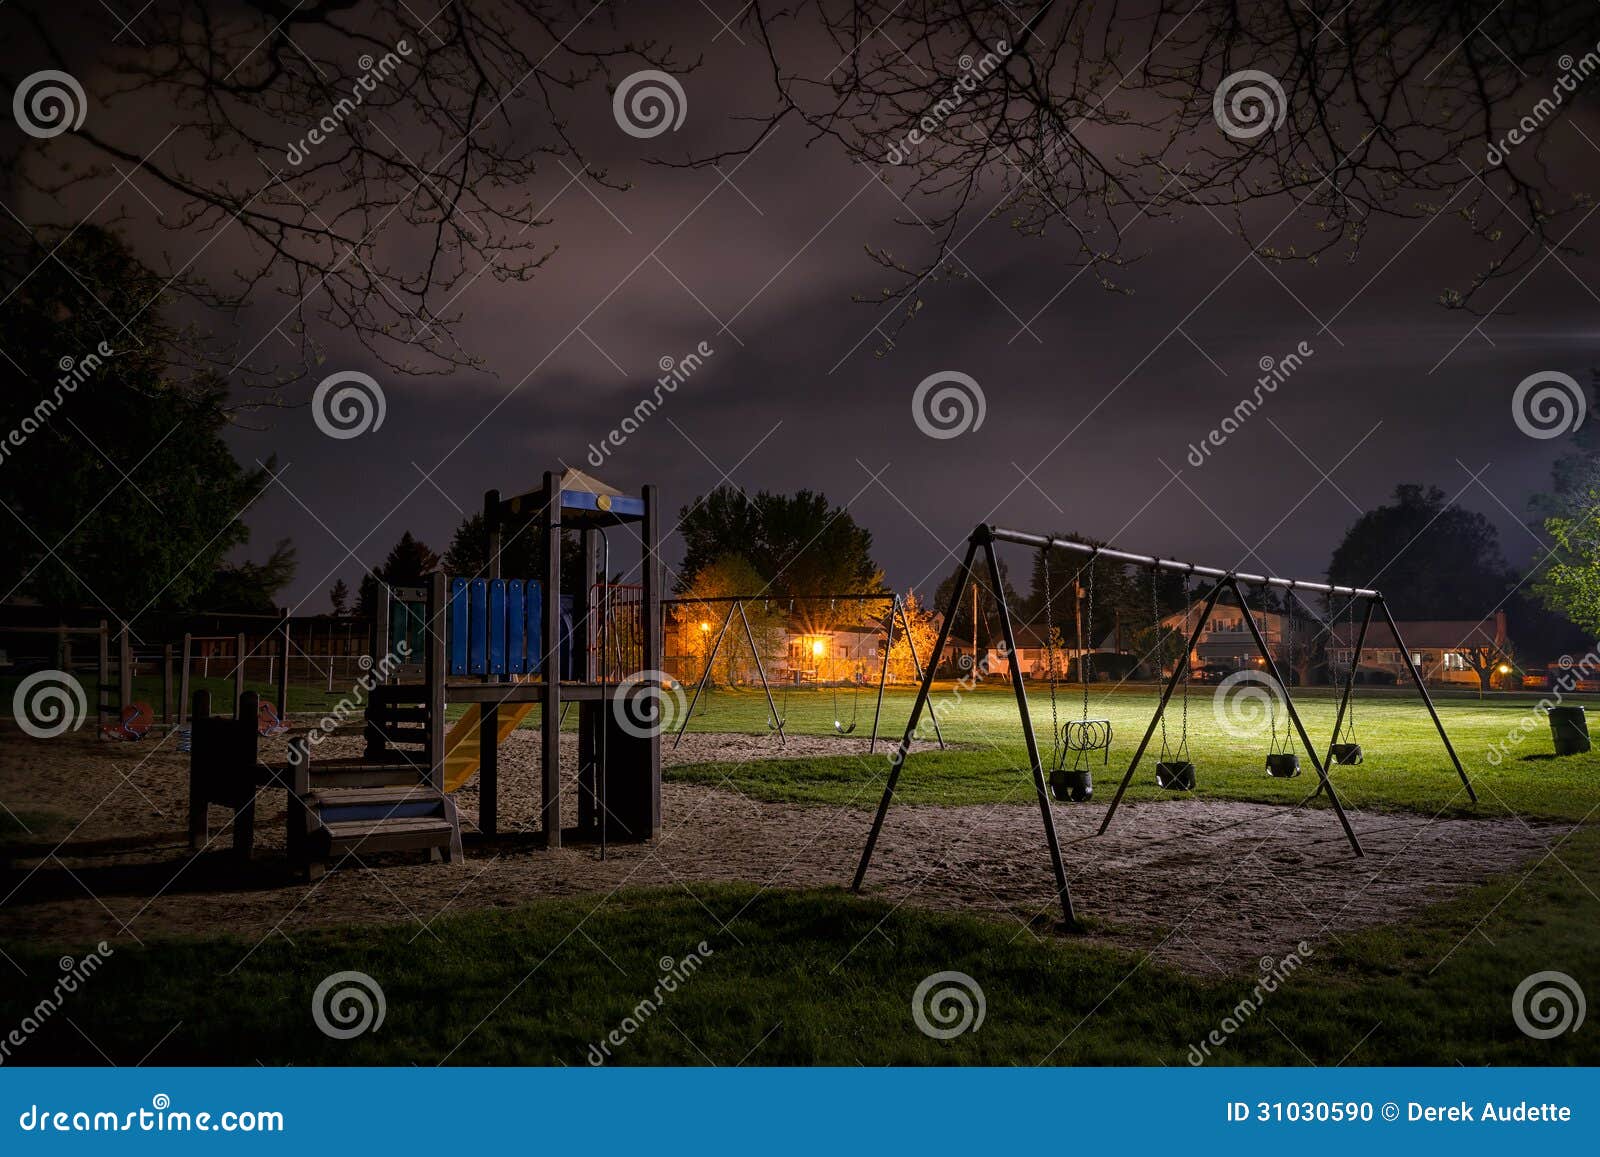 eerie children's playground at night